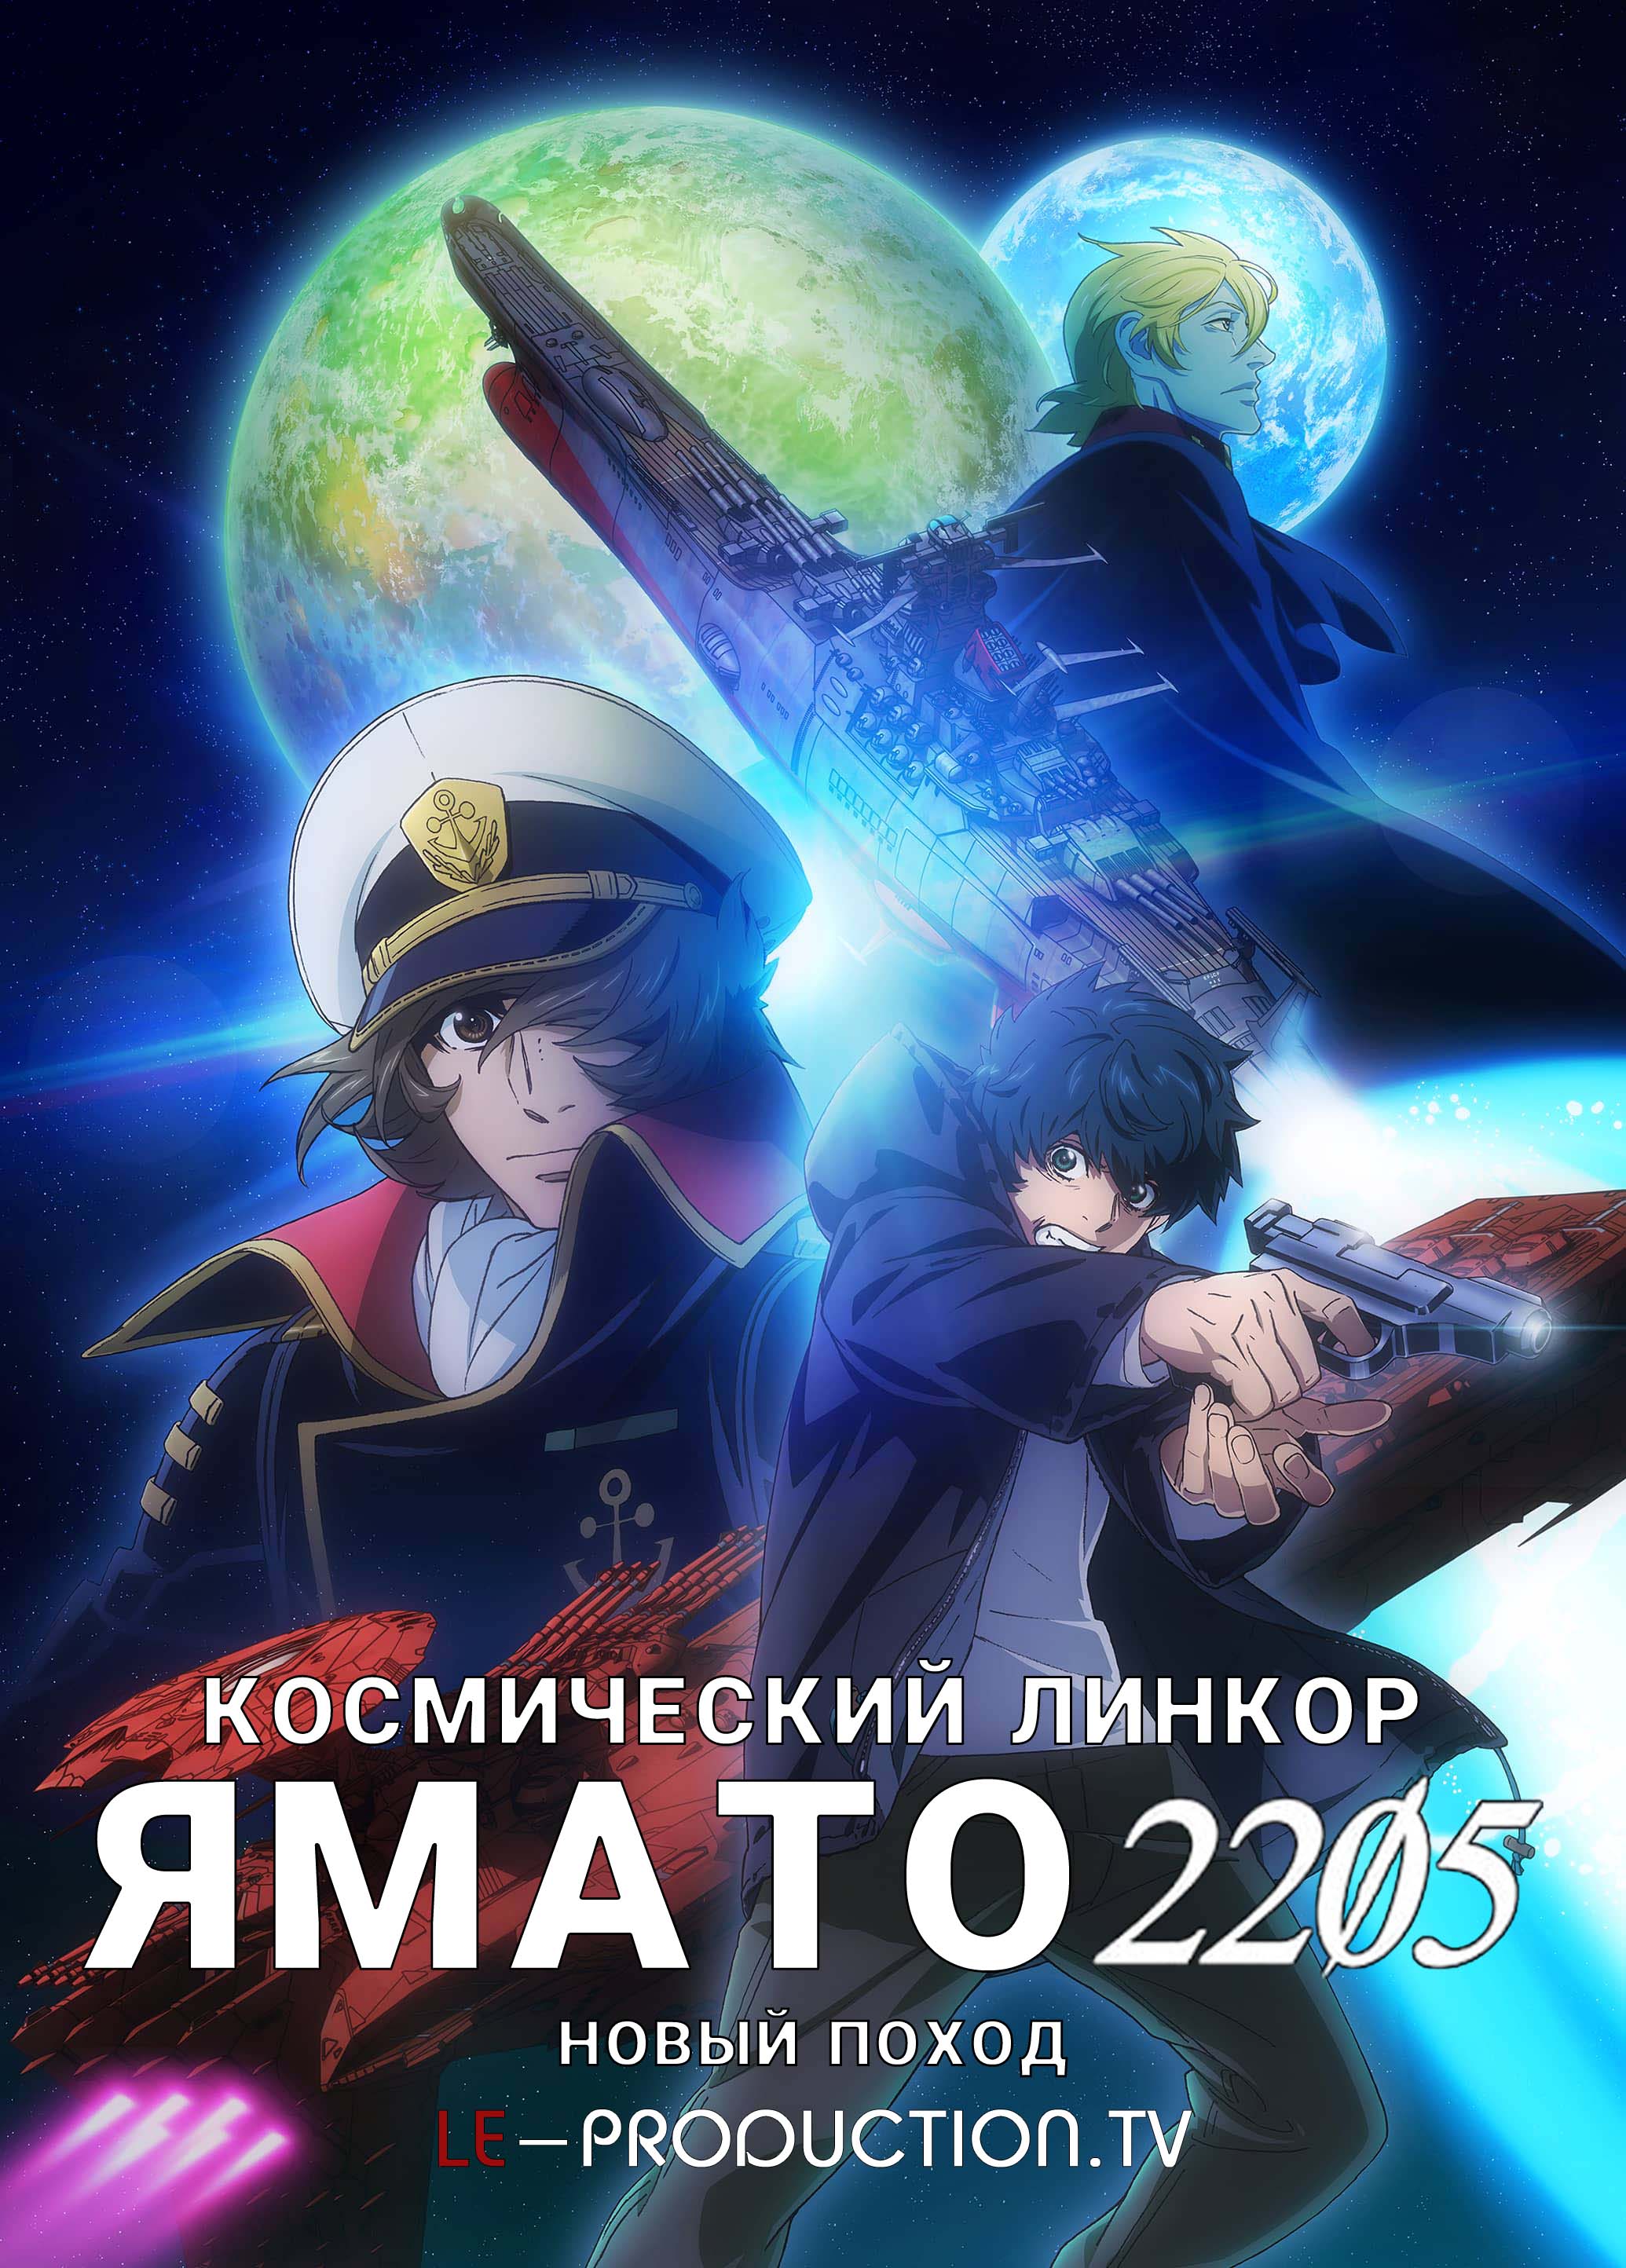 Космический линкор Ямато 2205: Новый поход / Space Battleship Yamato 2205: A New Journey / Uchuu Senkan Yamato 2205: Aratanaru Tabidachi